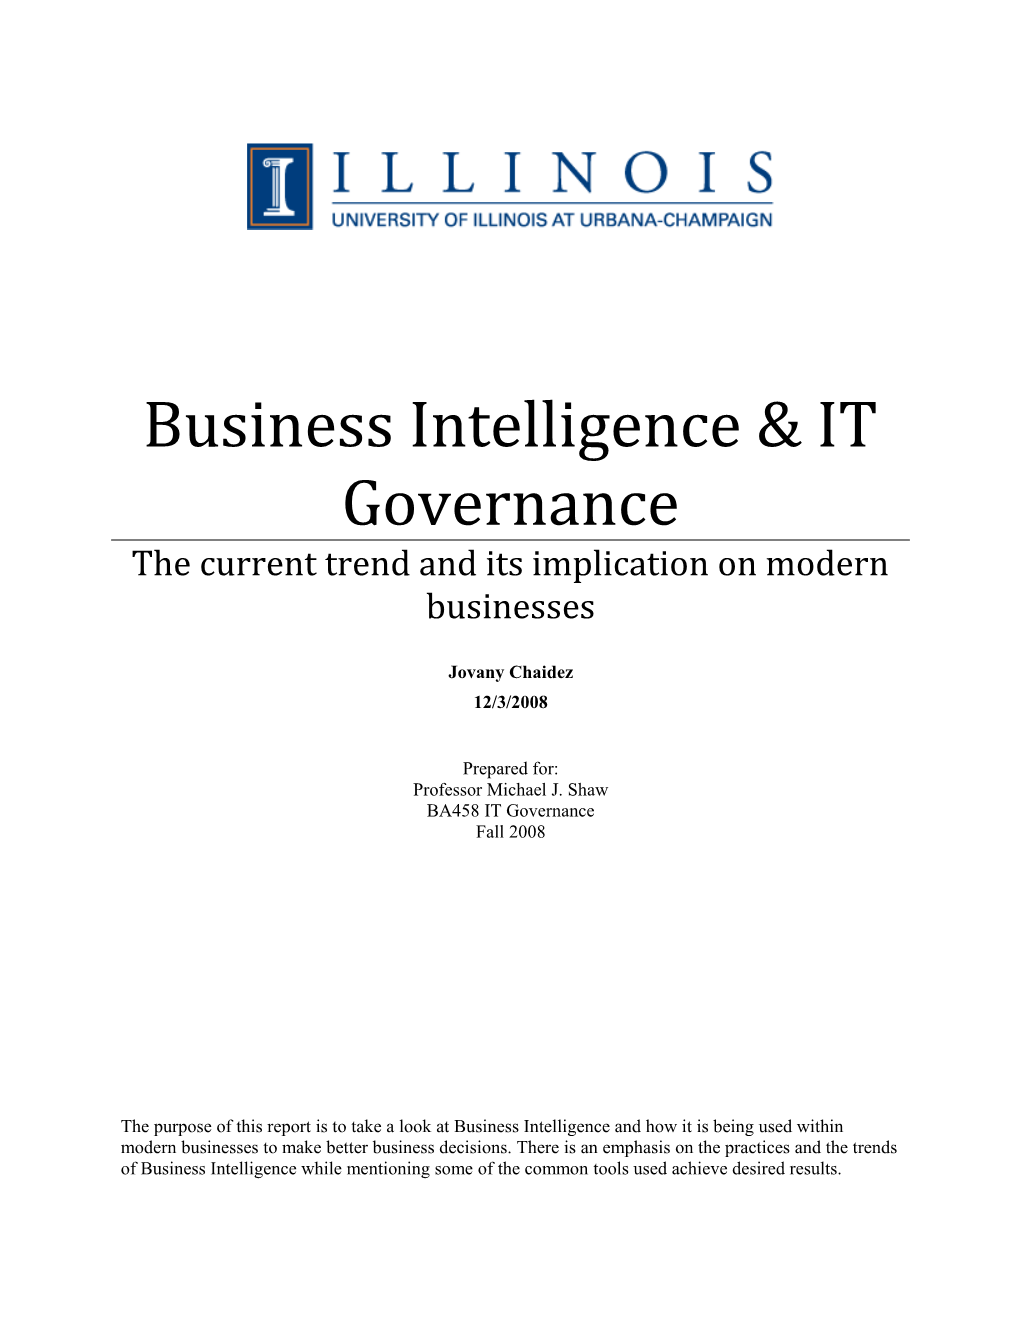 Business Intelligence & IT Governance